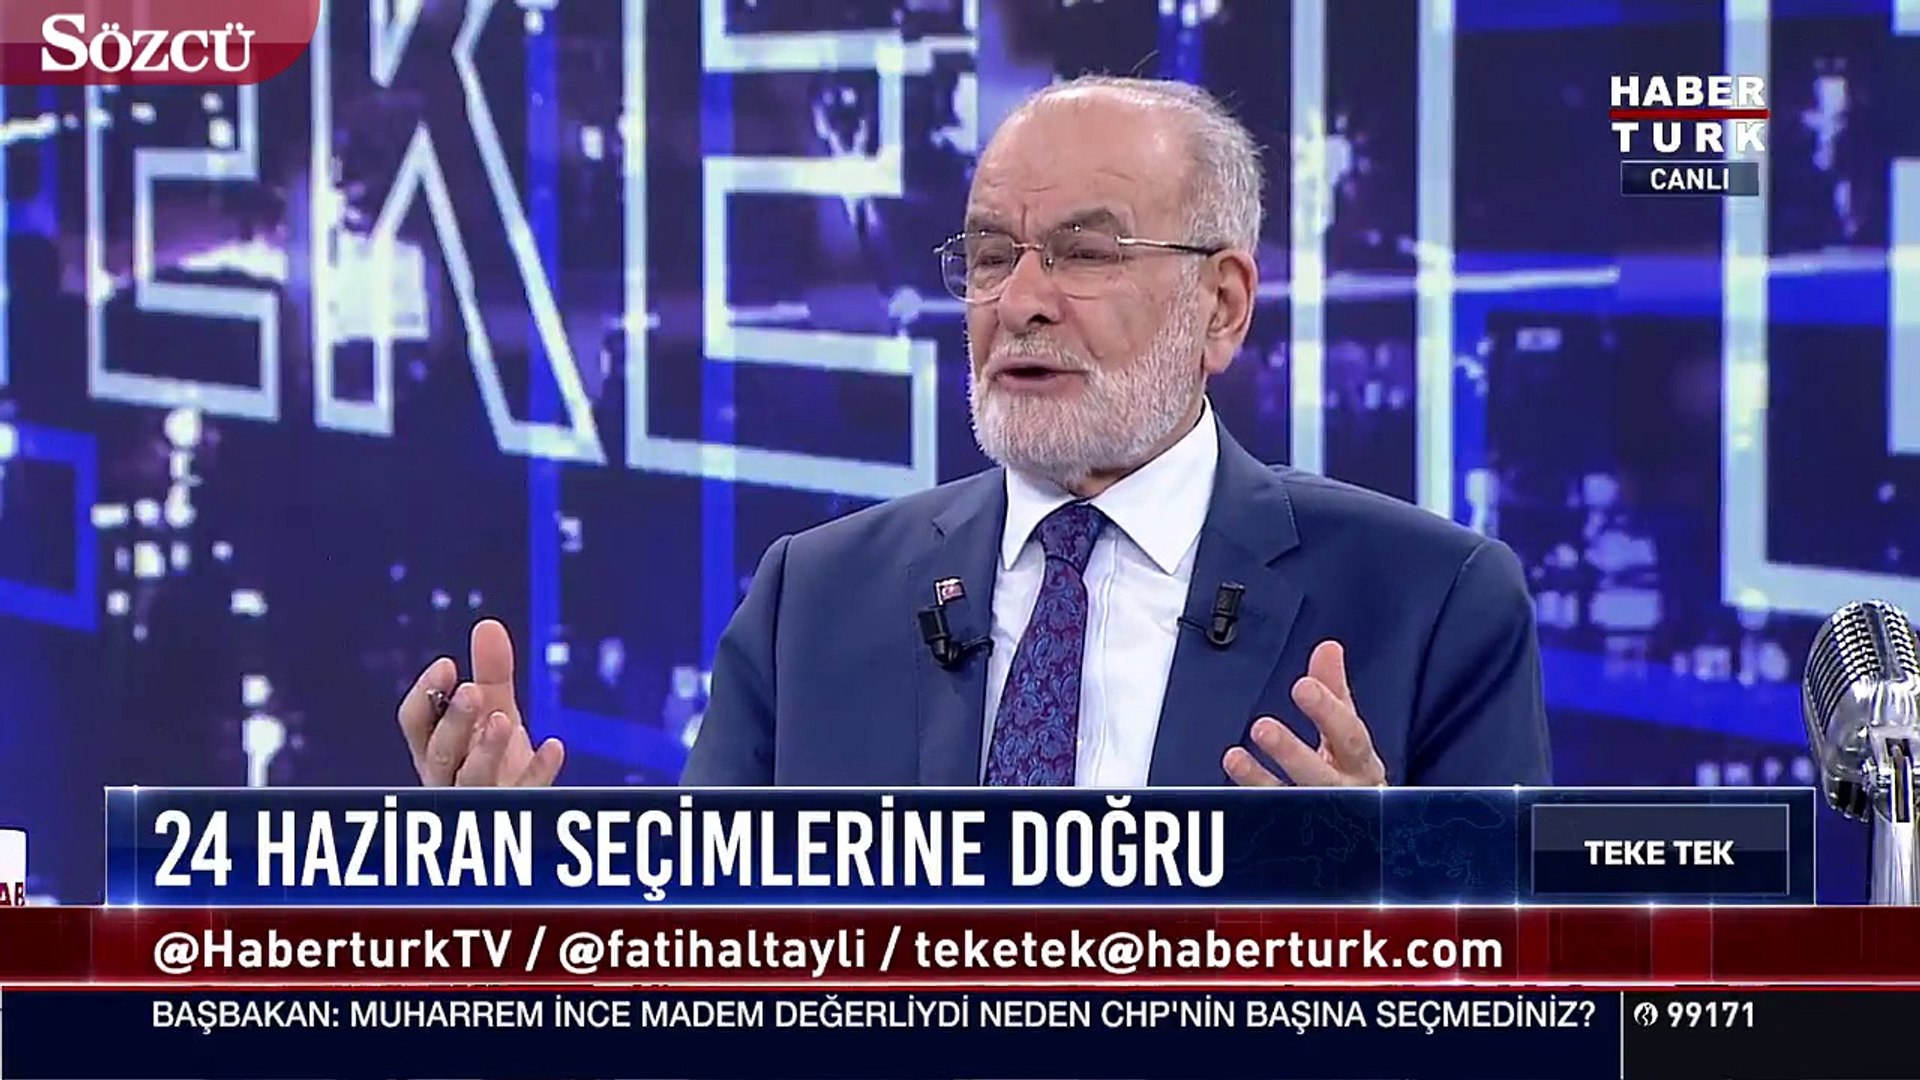 Temel Karamollaoglu Haberturk Tv De Fatih Altayli Nin Sorularini Yanitladi Dailymotion Video